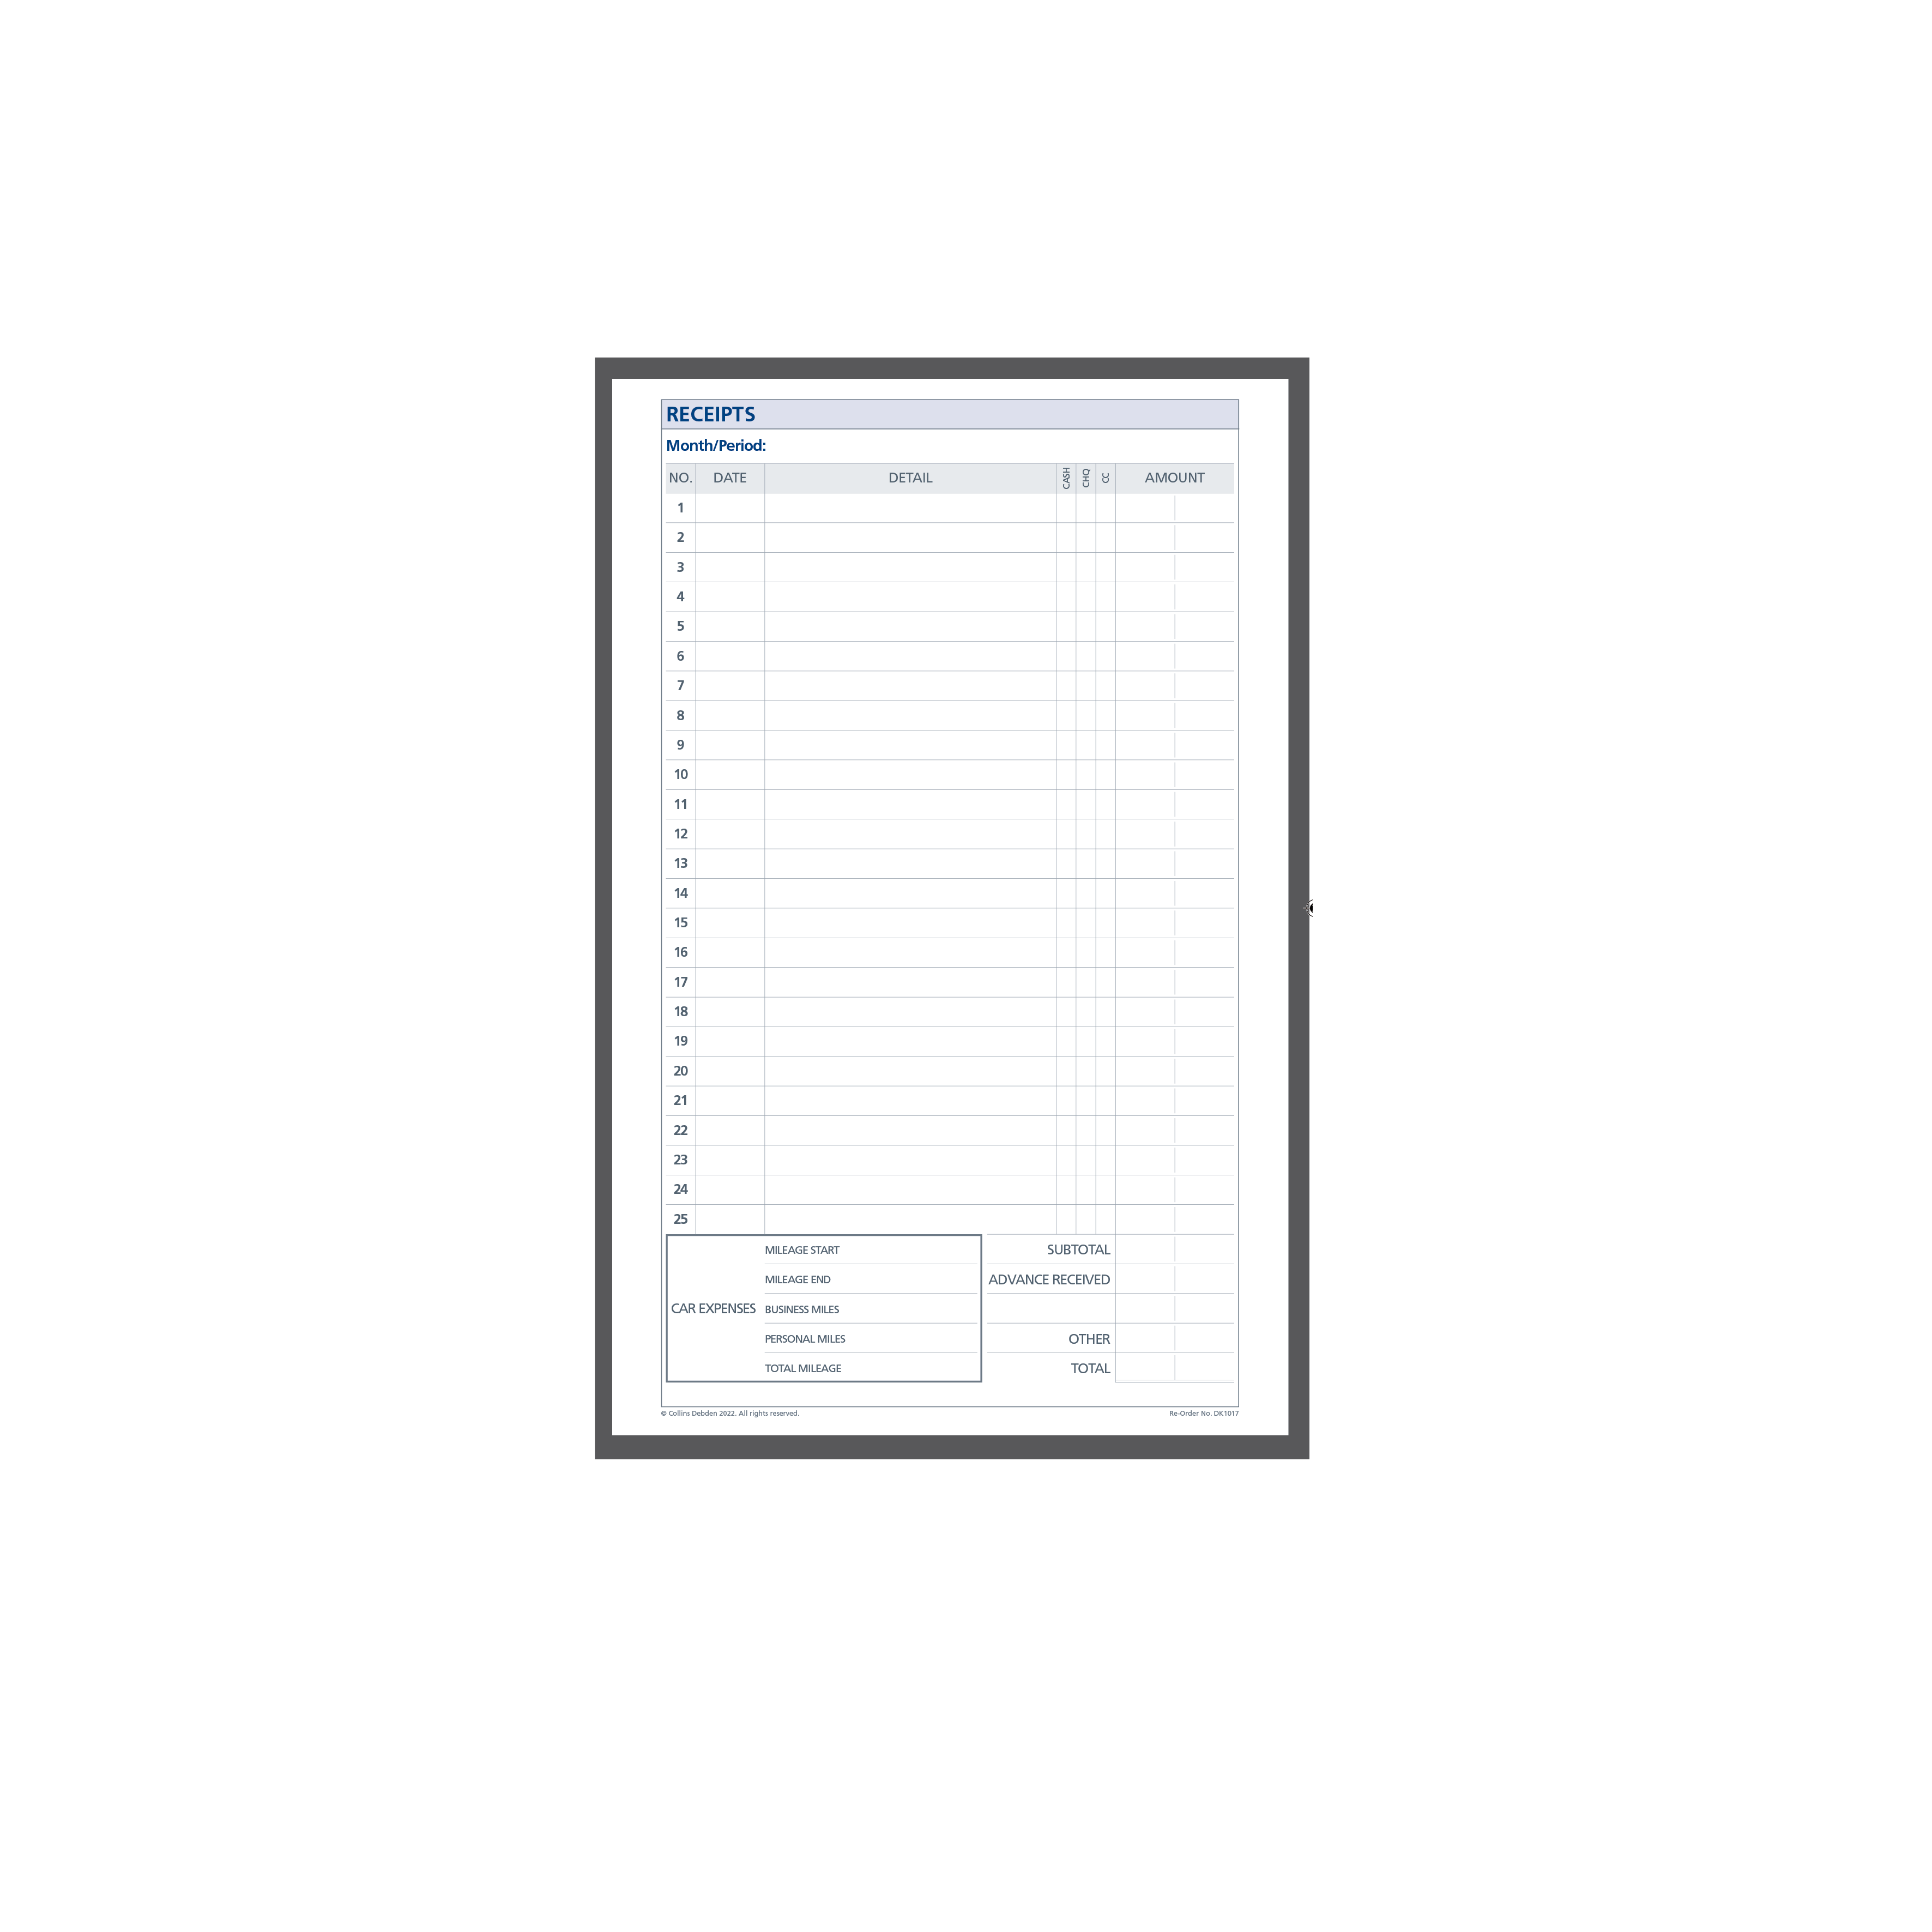 DayPlanner - Desk Size Receipt Envelopes Default Title